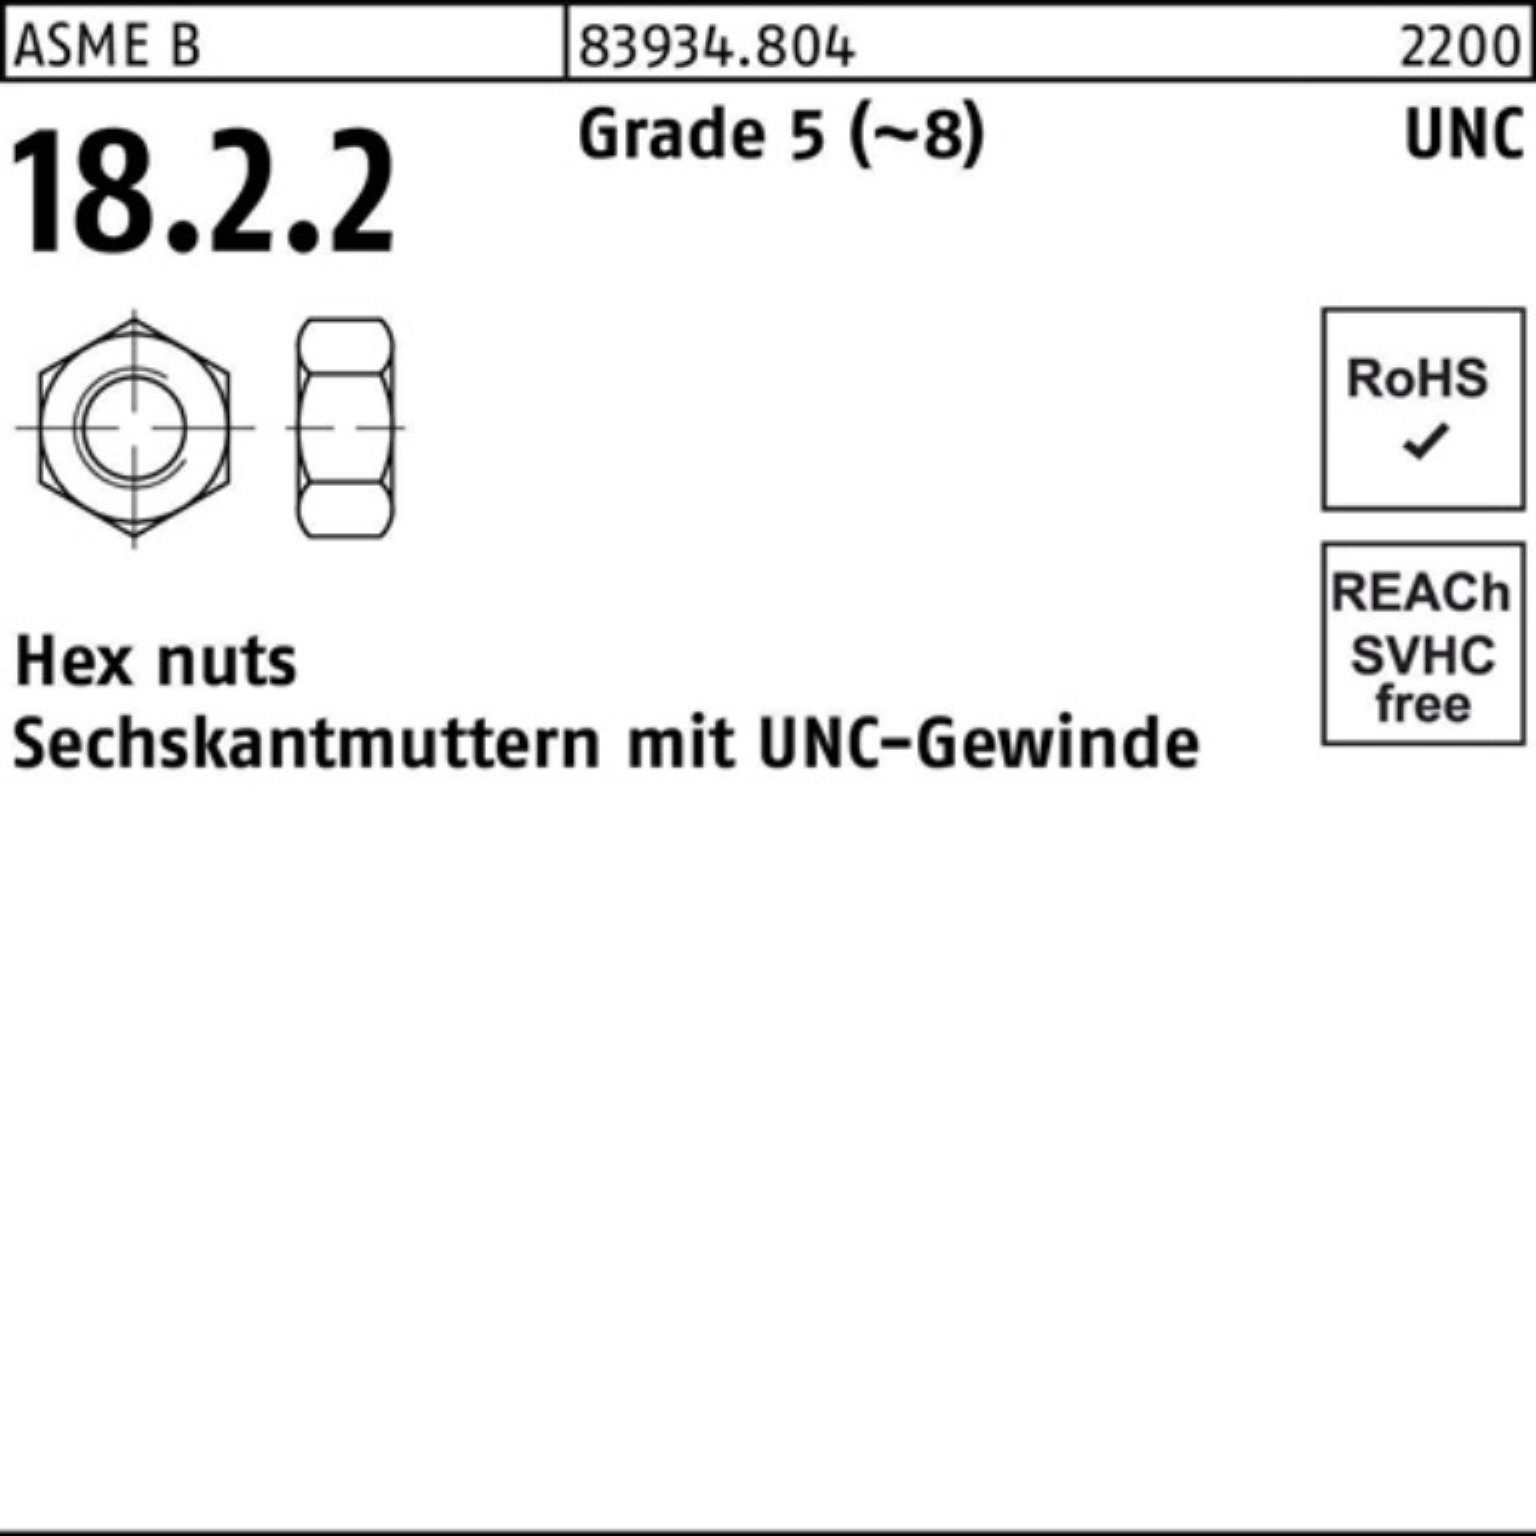 5 100er St Sechskantmutter R (8) Grade 1 Reyher Pack 83934 3/4 Muttern 1 UNC-Gewinde